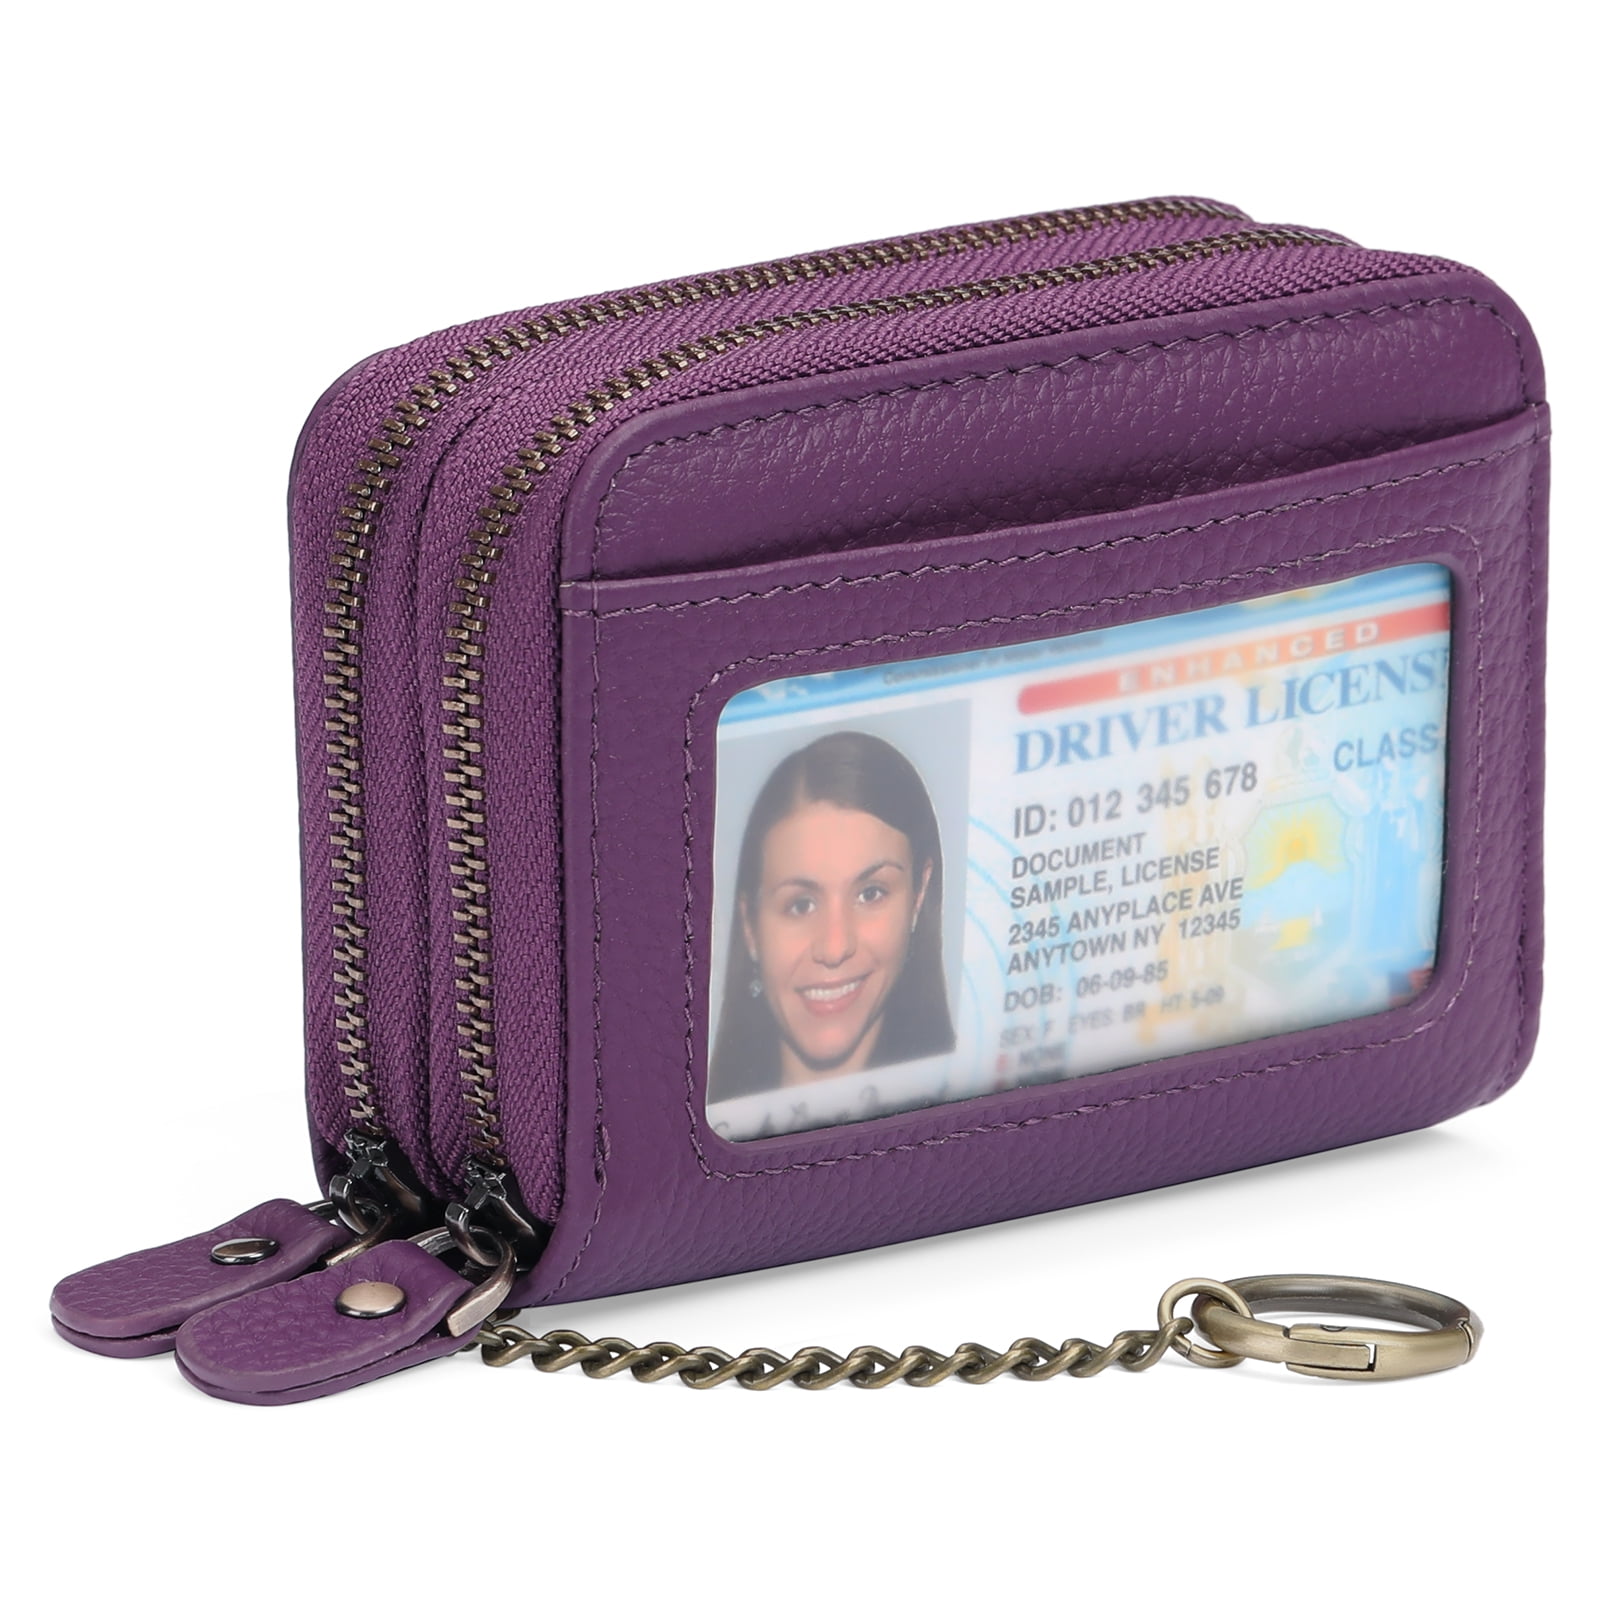 GAEKEAO Credit Card Holder Wallet for Women RFID Blocking Small Genuine ...